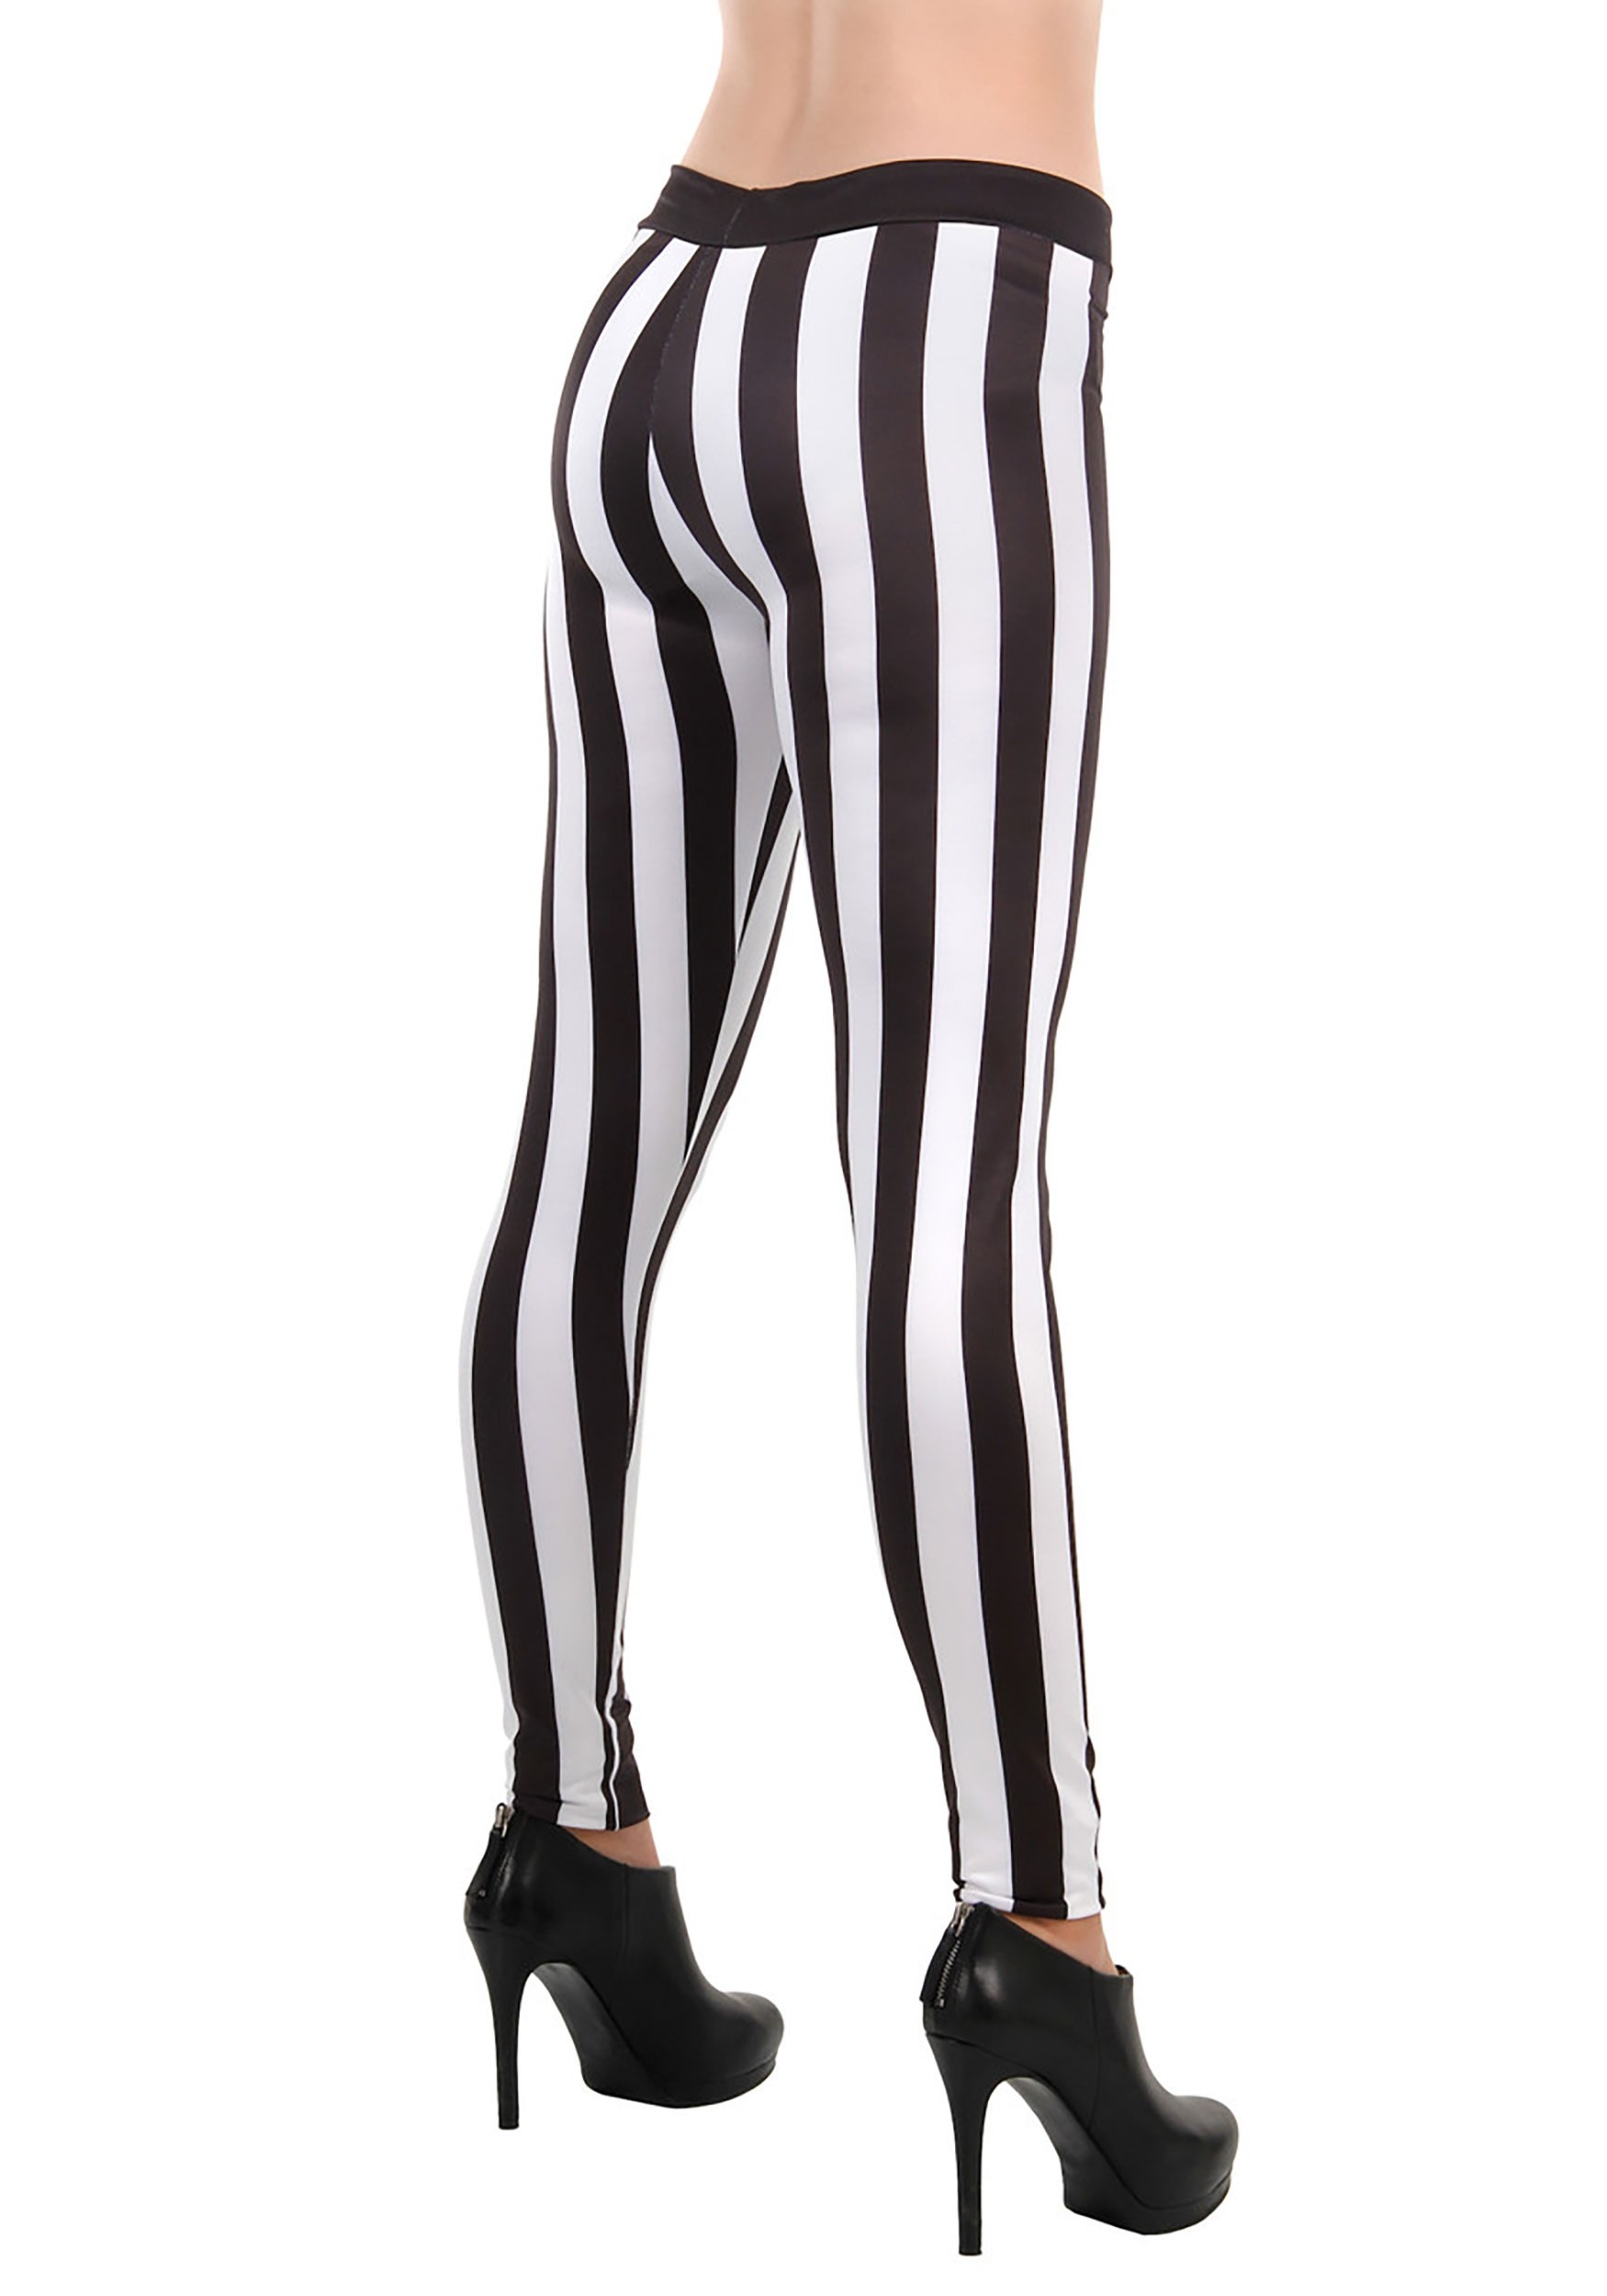 Black White Striped Leggings, Horizontal Stripe Leggings, Stretch